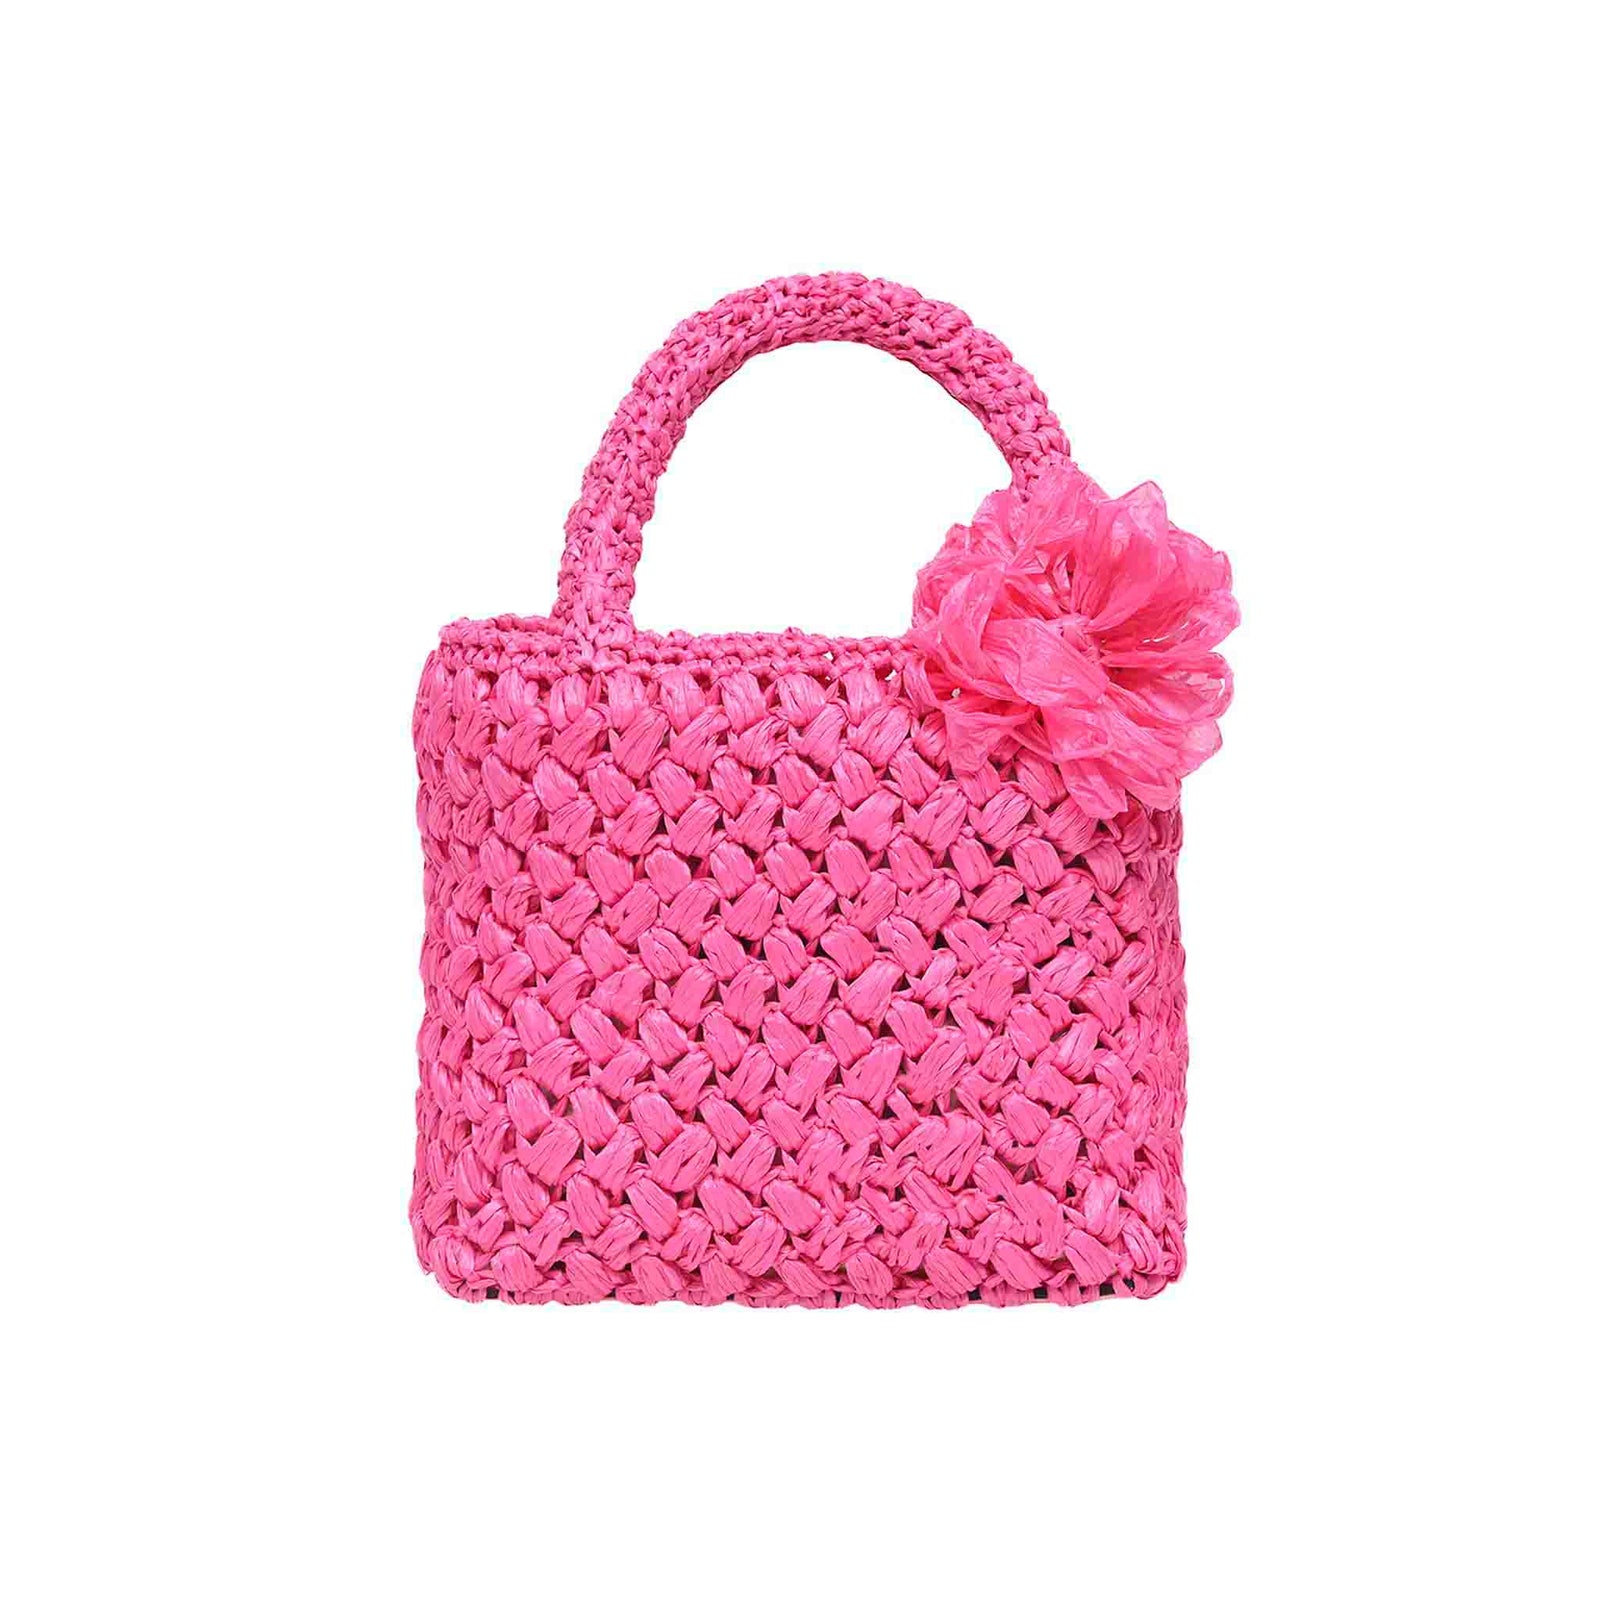 purse #pink #aesthetic #designers #louisvuitton #louisvuittonhandbags  #wallet #expensive PINK LOUIS VUITTON BAG AND WALLET CHECKER #Checke… |  Bags, Handbag, Purses